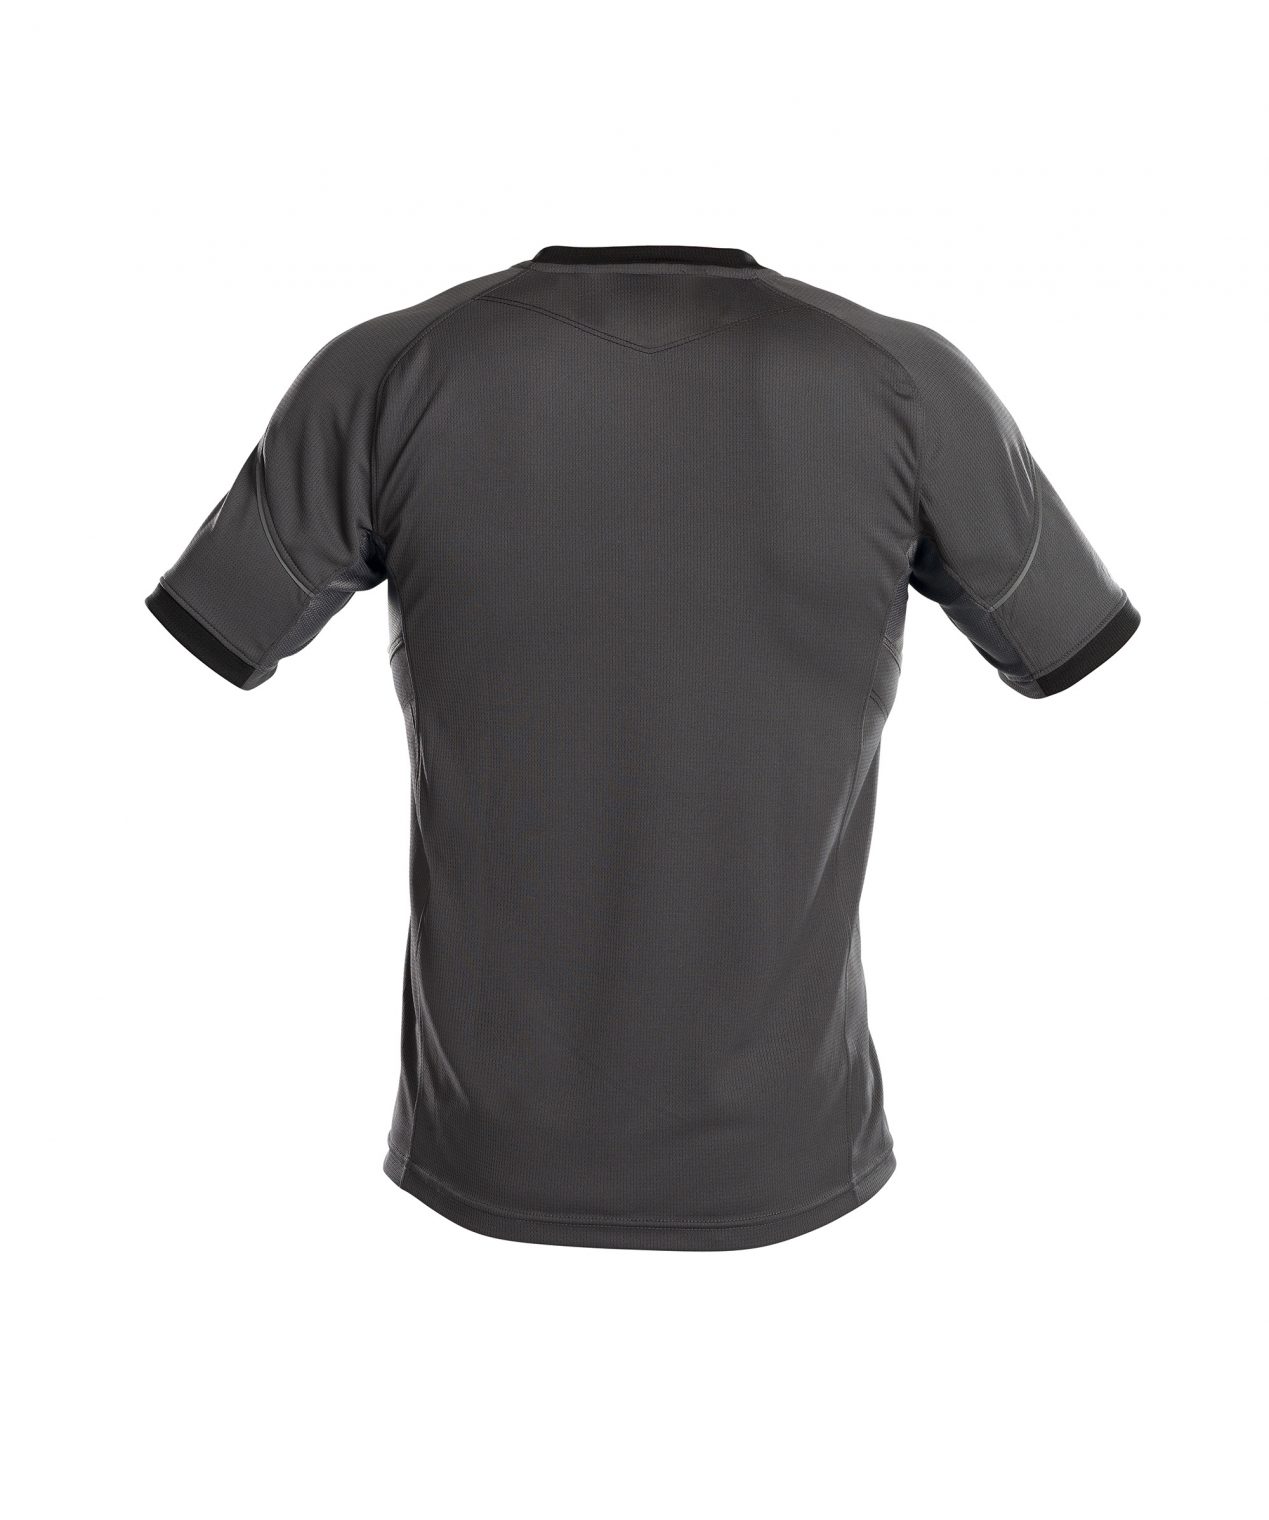 nexus t shirt anthracite grey black back